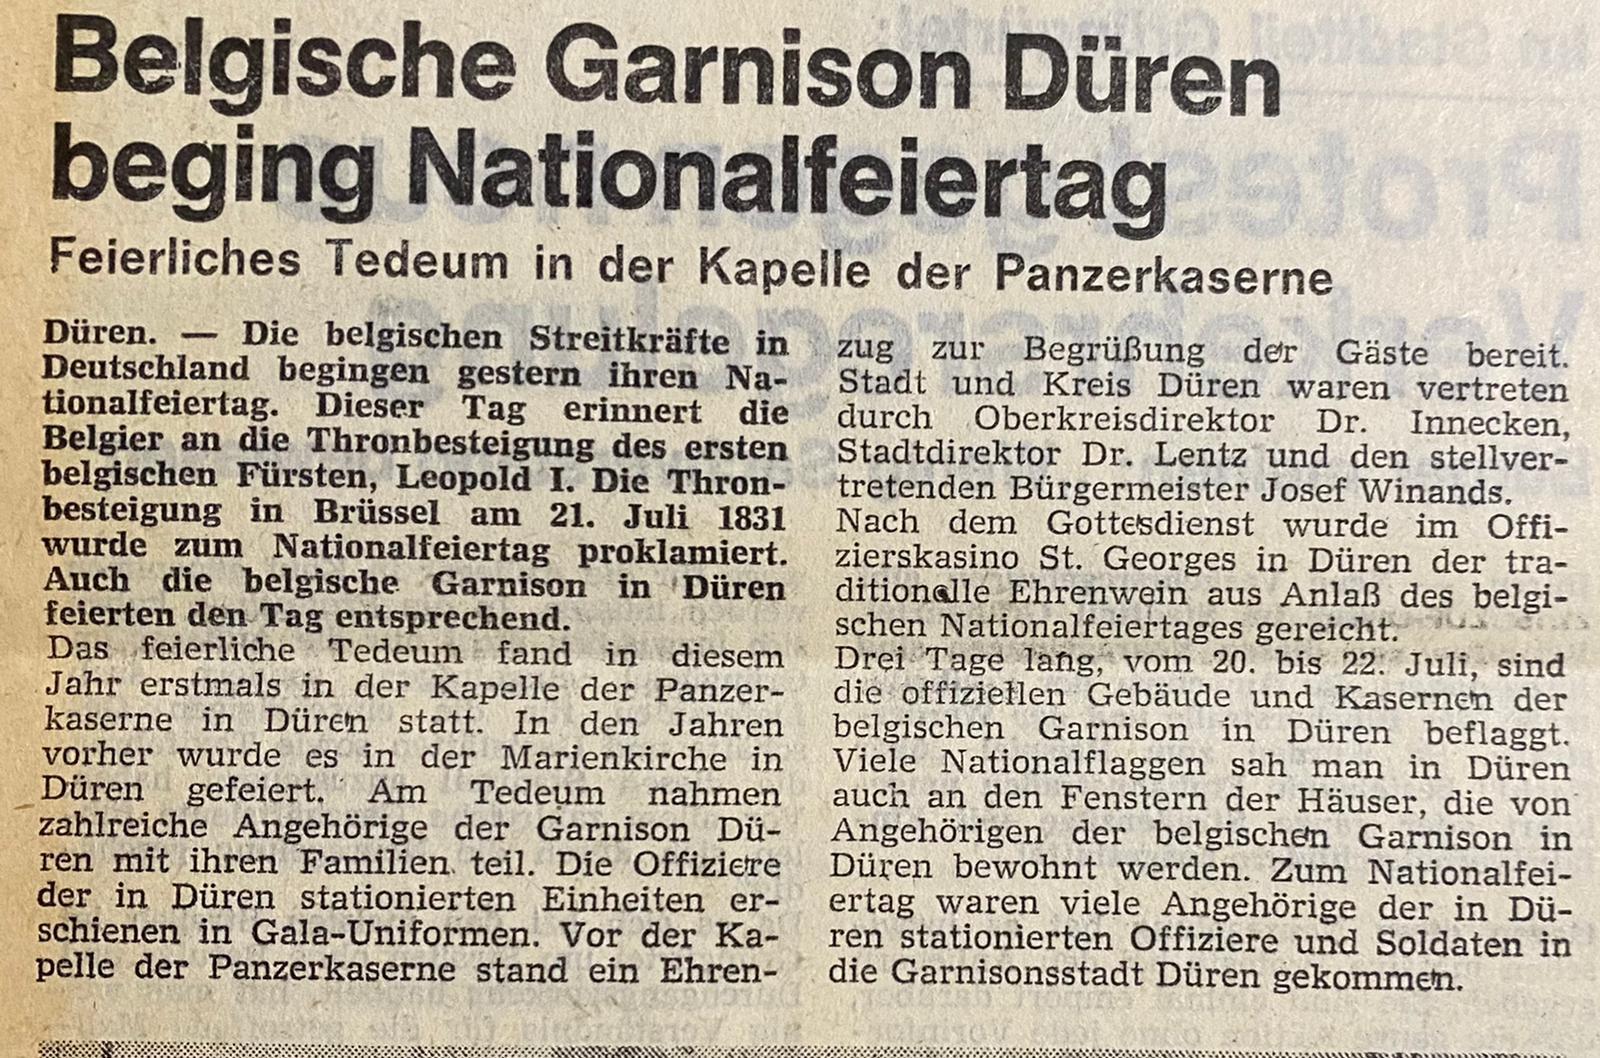 Bild 23_DN_1976_07_22_Belgische_Garnison_Düren_beging_Nationalfeiertag.jpeg